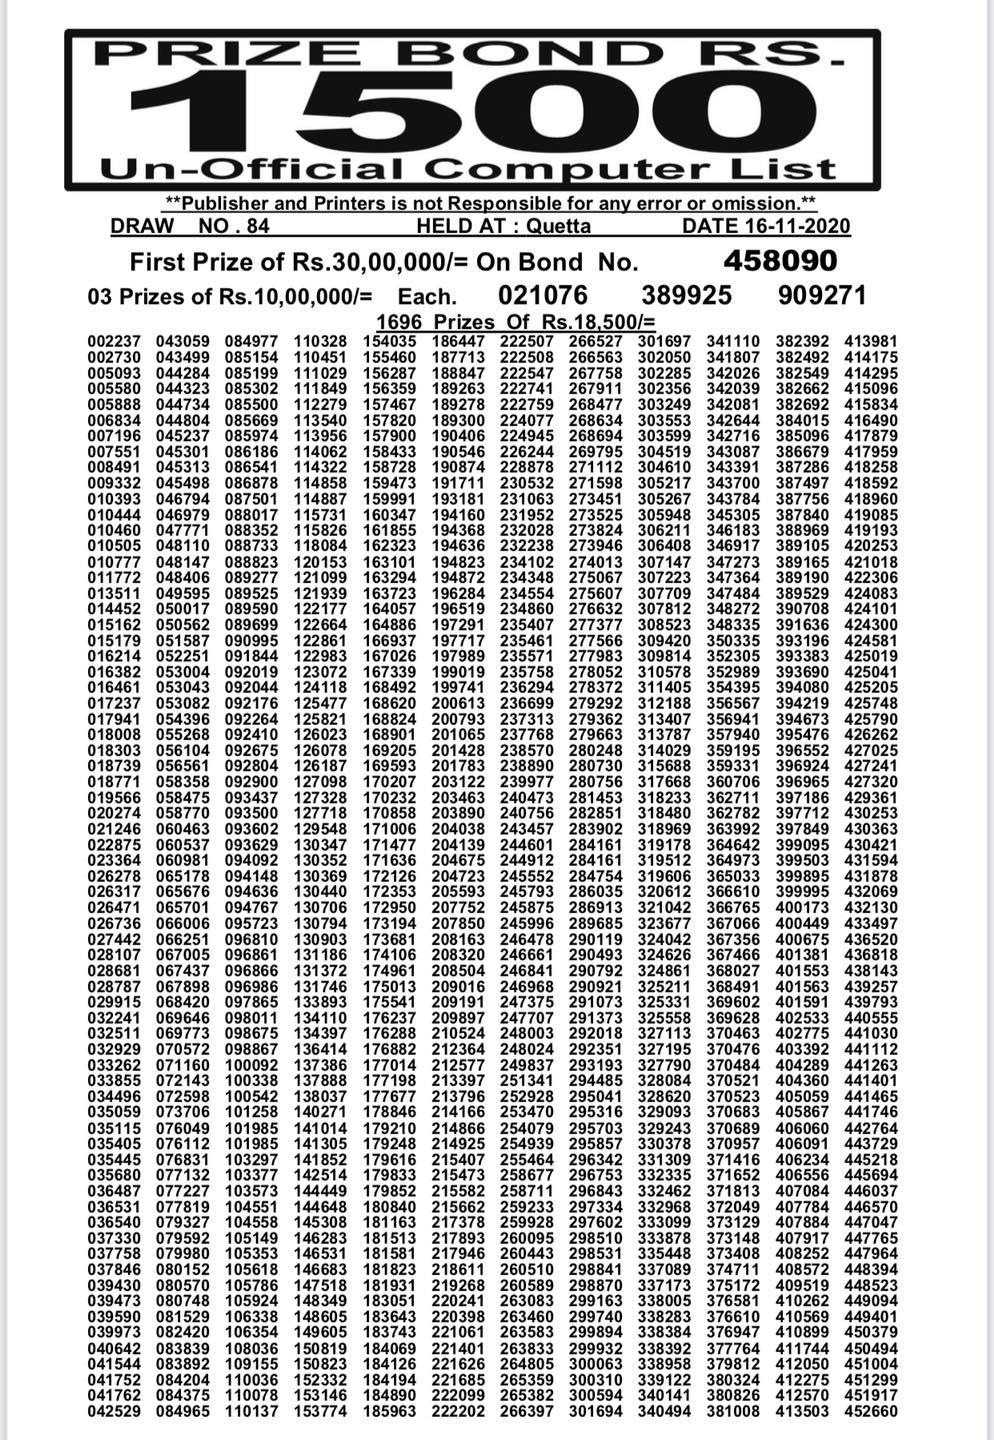 Rs 1500 Prize Bond Draw No 84 Winners List Today, 16 November 2020